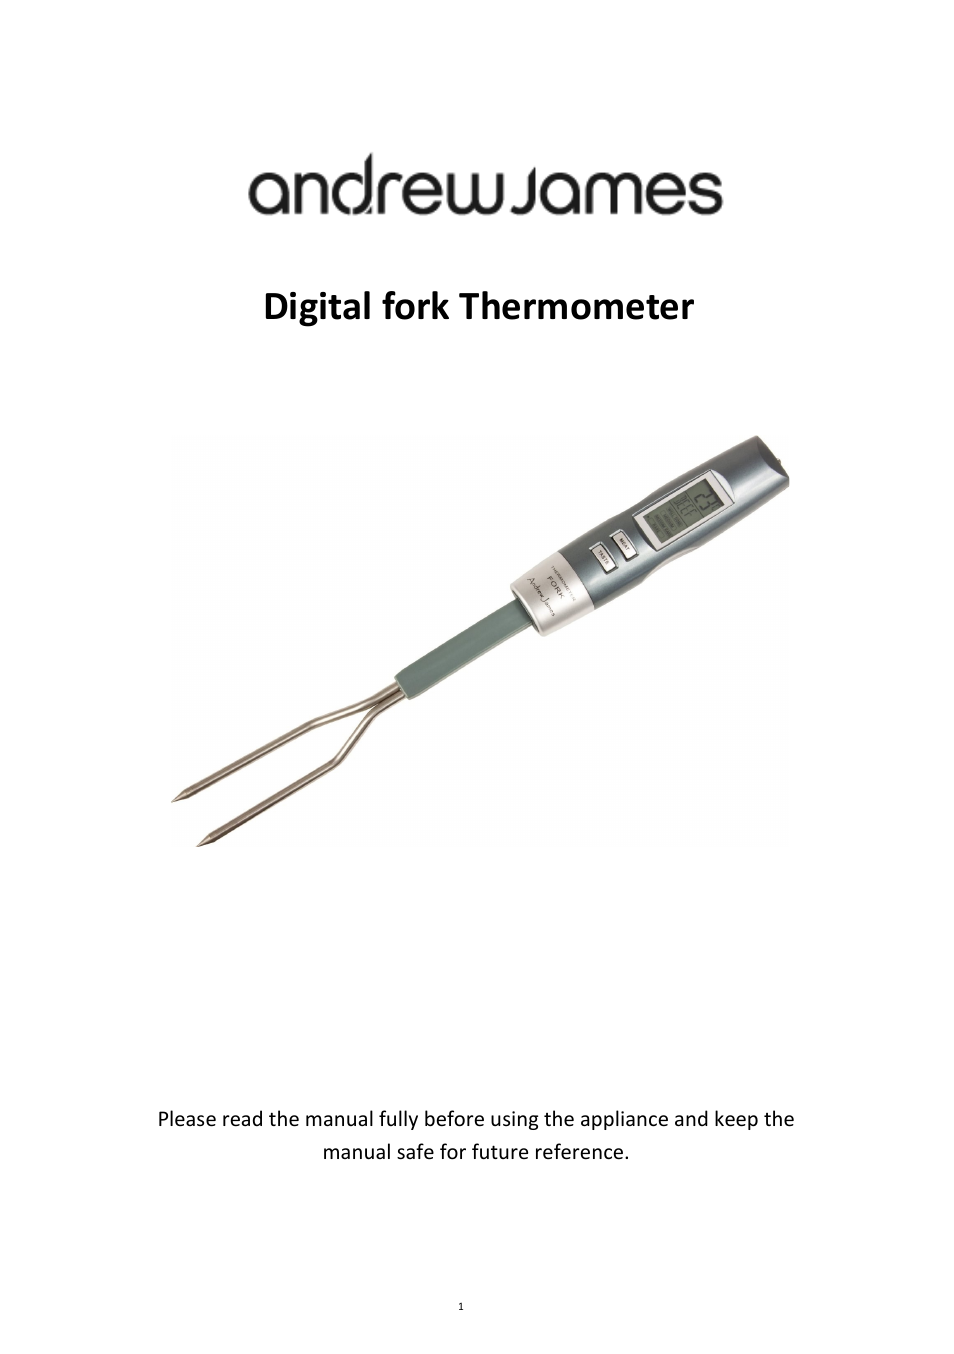 AJ000019 Fork Thermometer